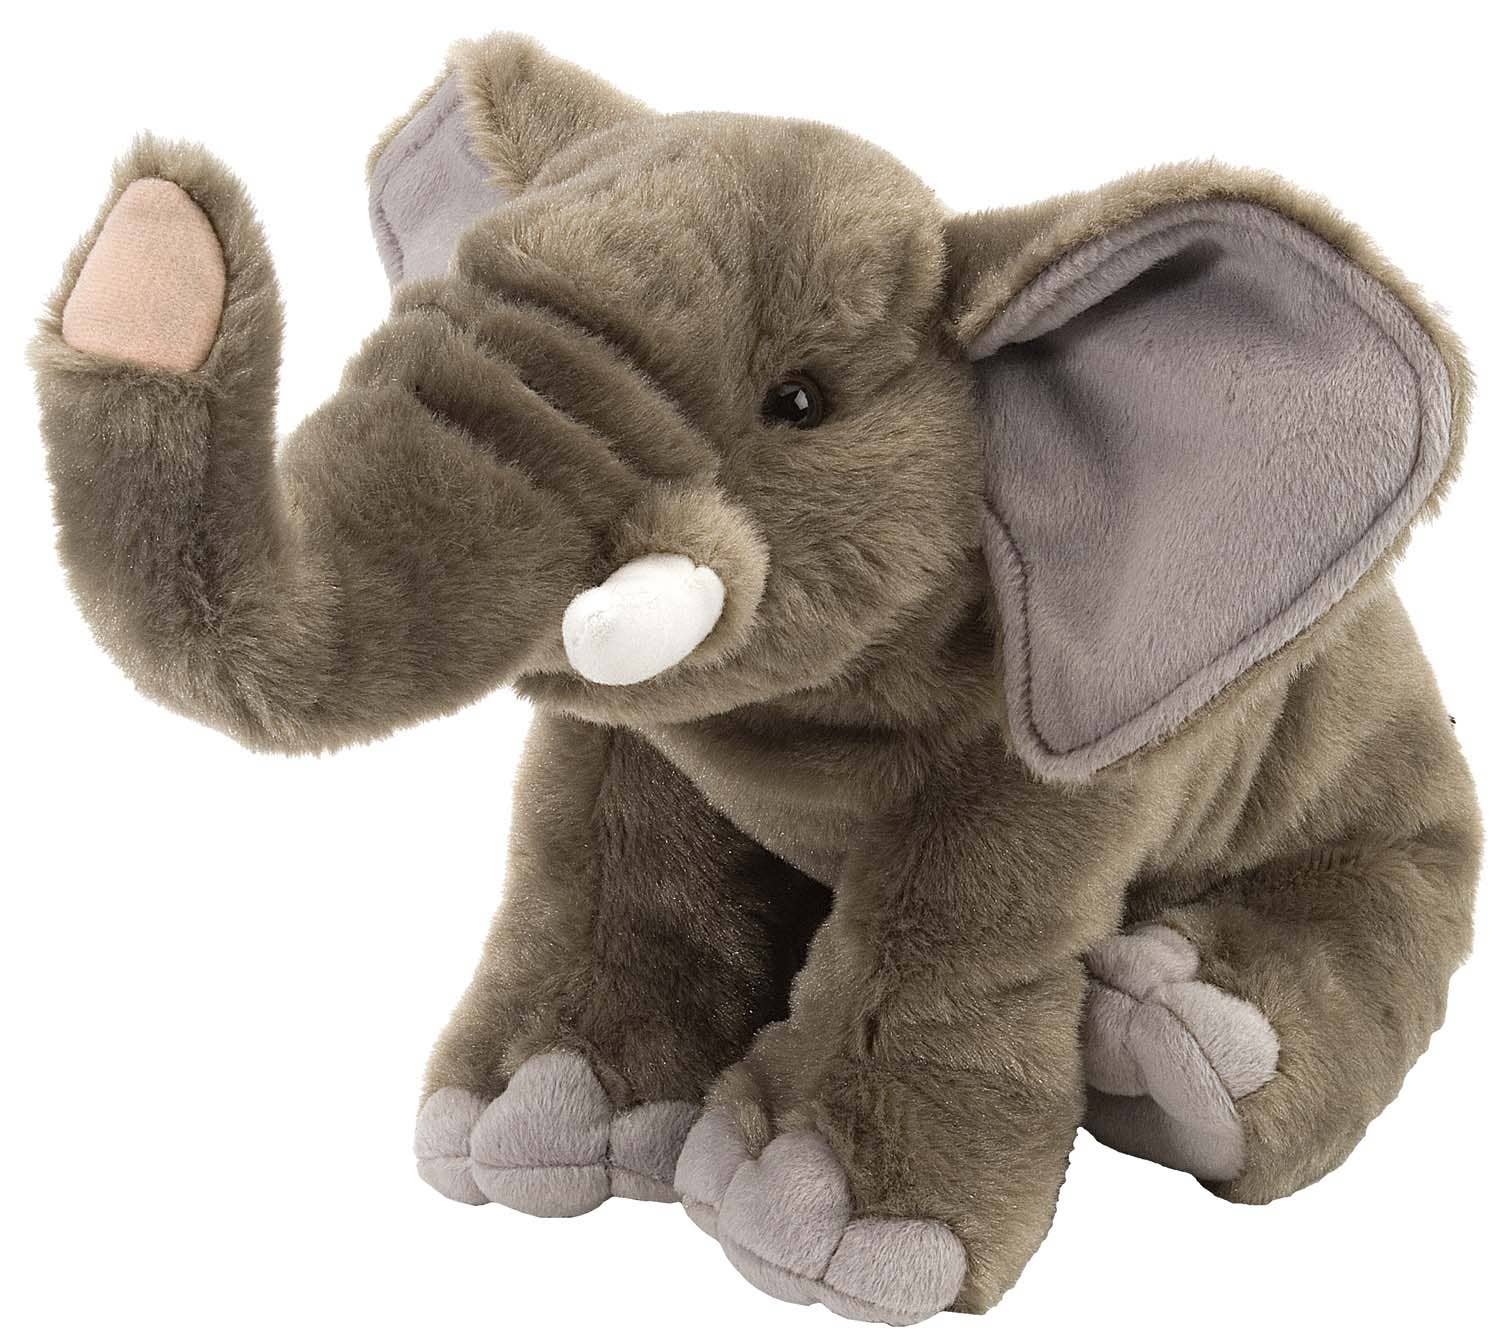 CK African Elephant Stuffed Animal 12